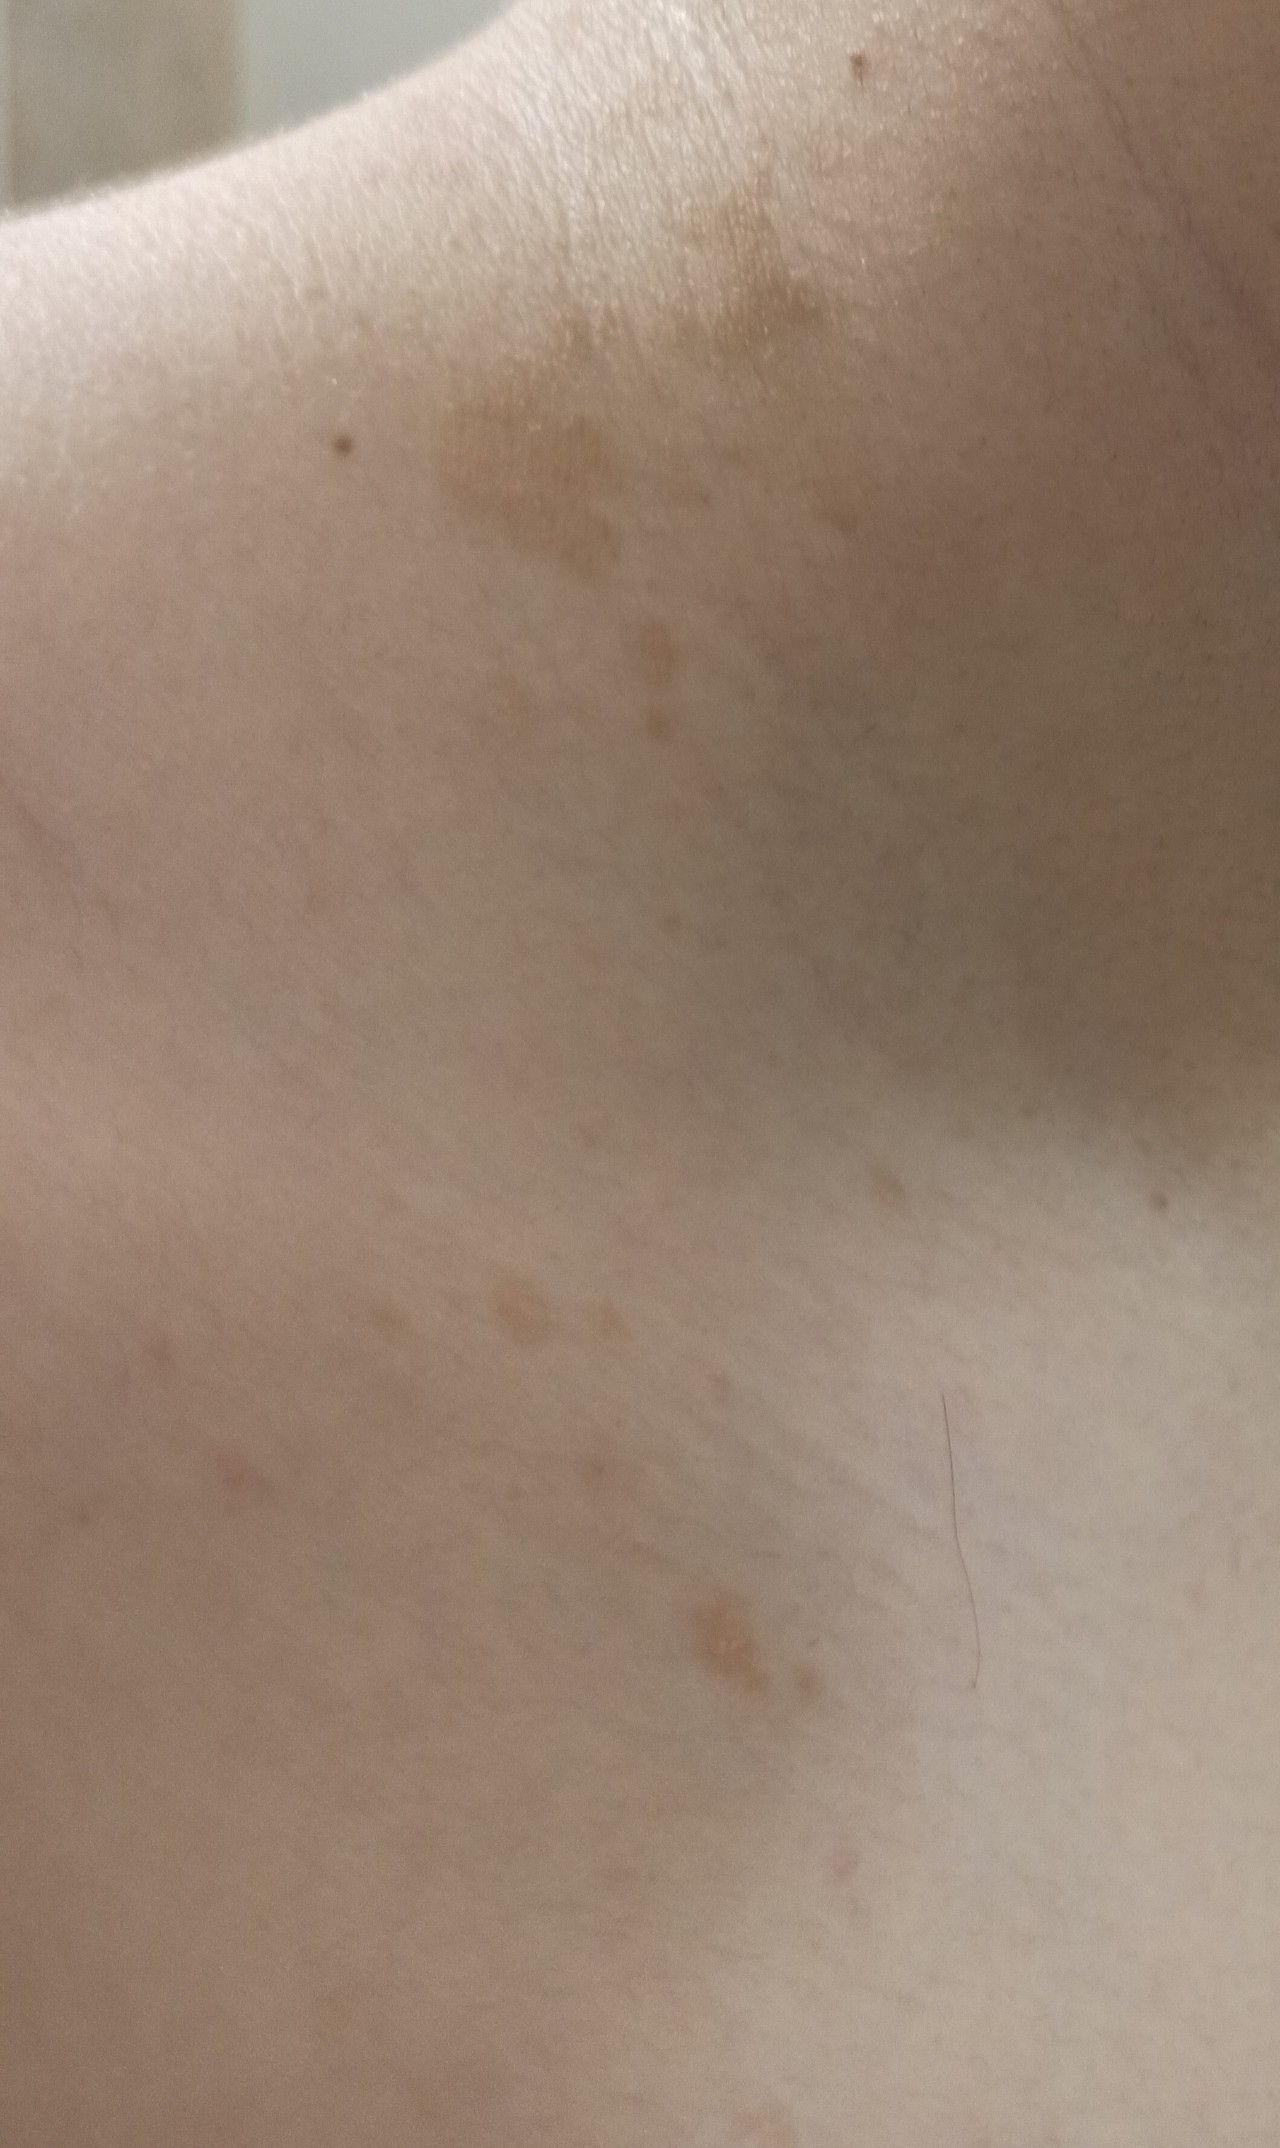 светло коричневые пятна на груди у женщин фото 77